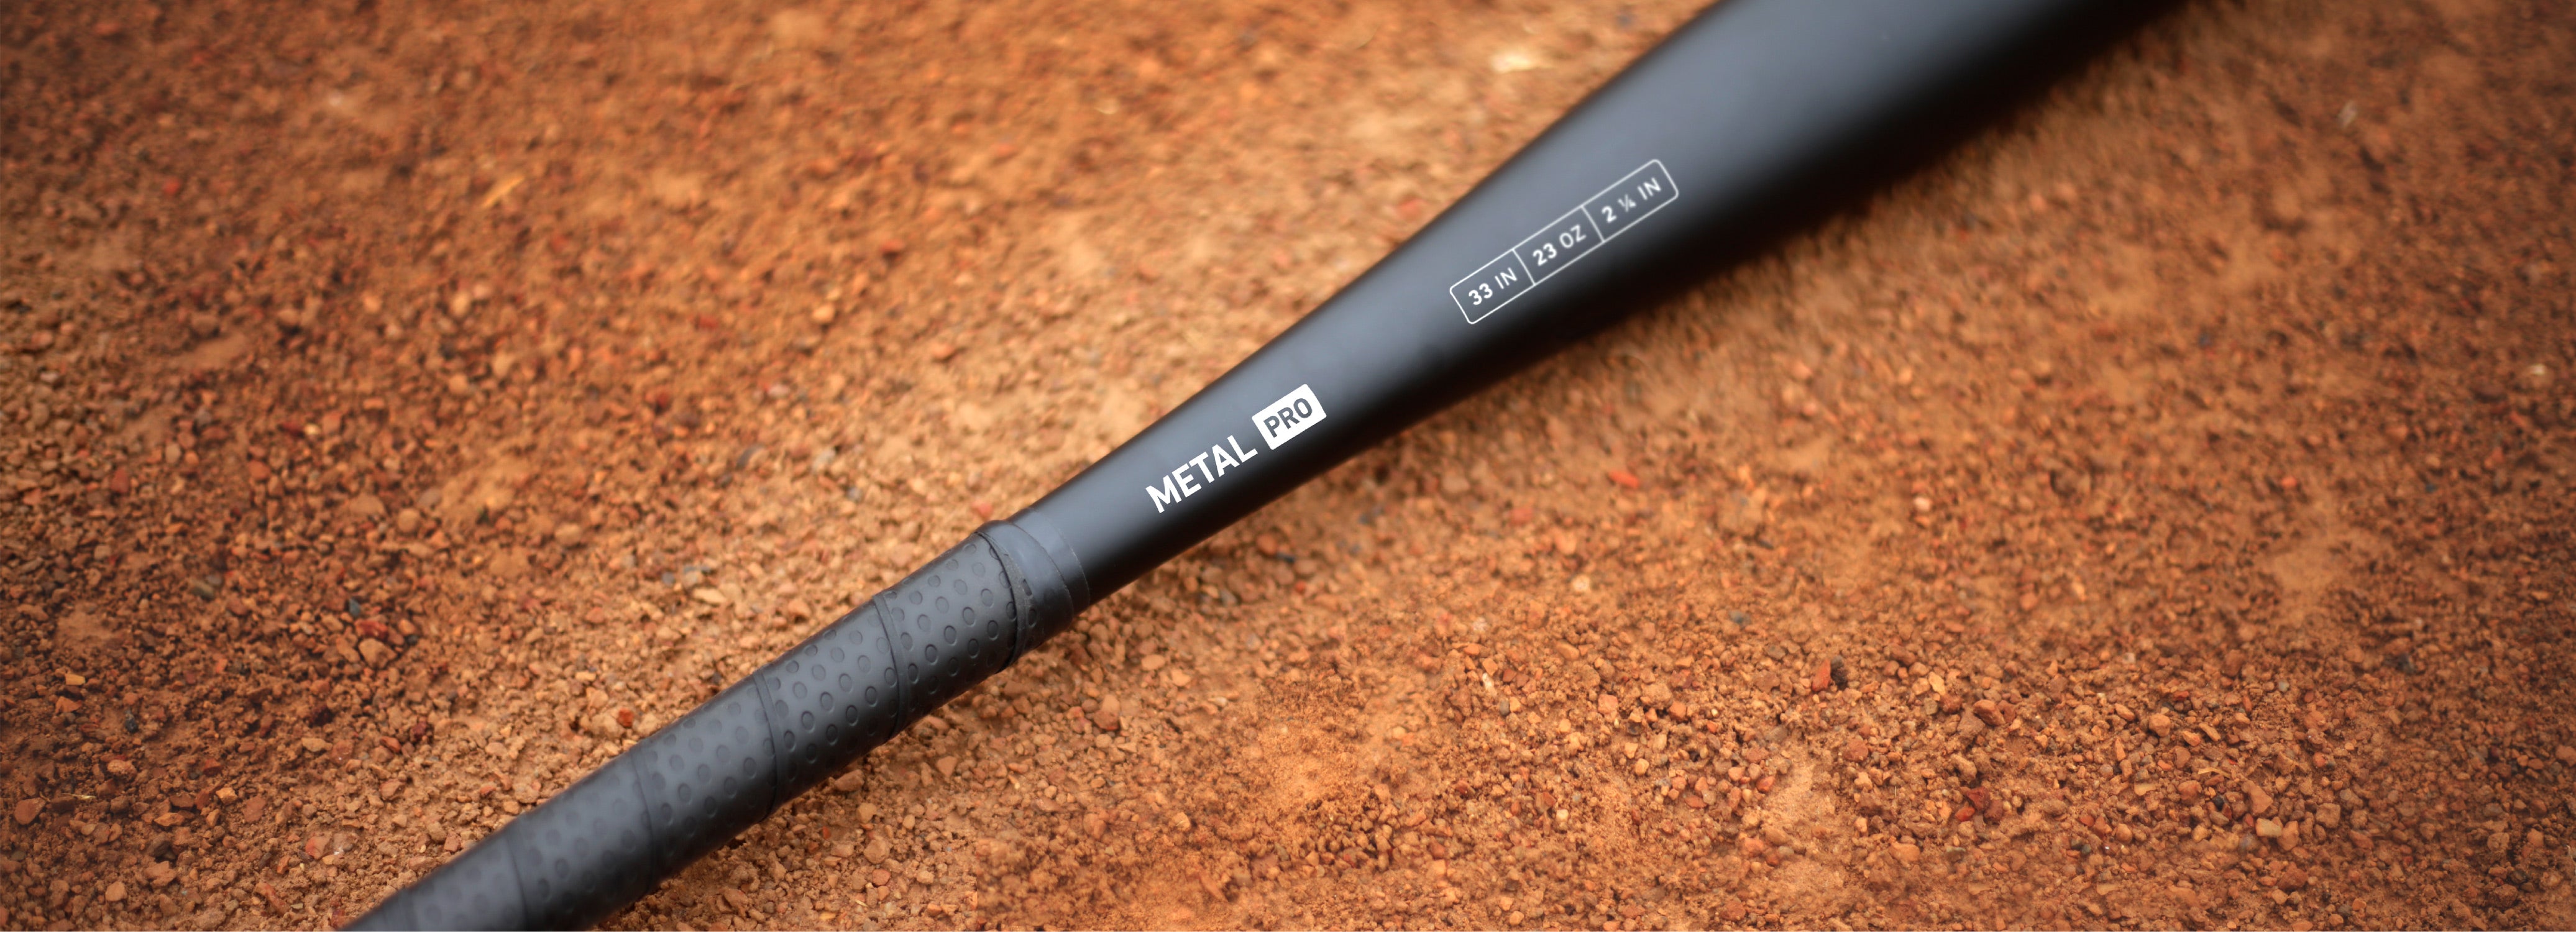 Louisville Slugger Genuine Mixed Baseball Bat - GEN-PK-32 Wood